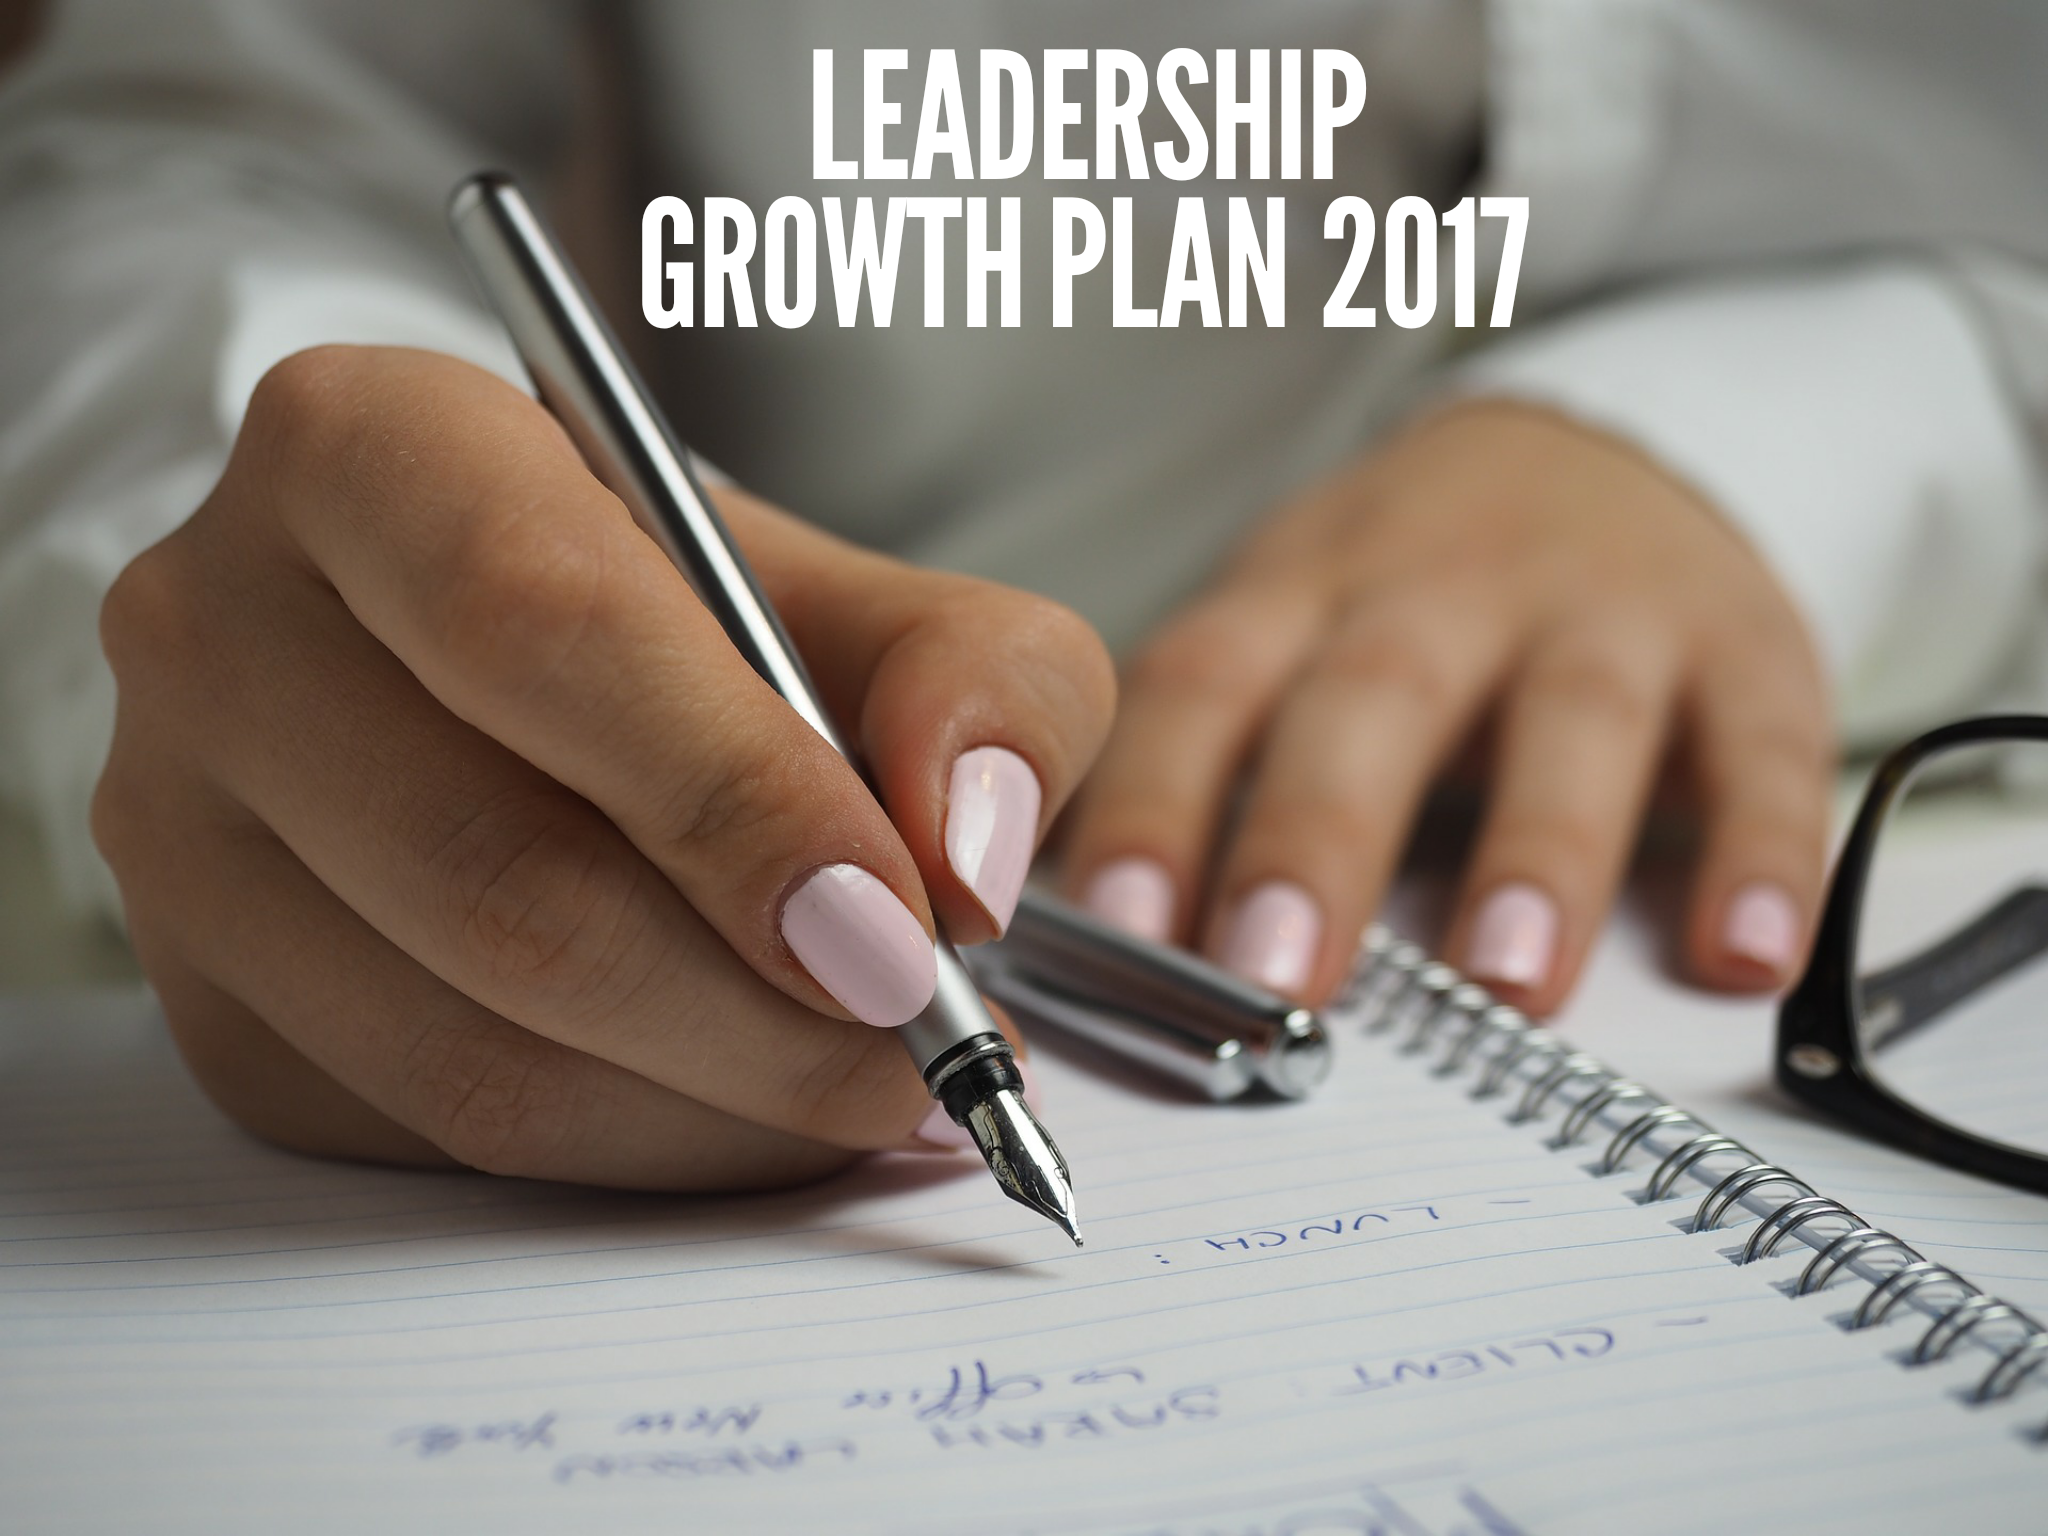 Leadership Growth Goals 2017!